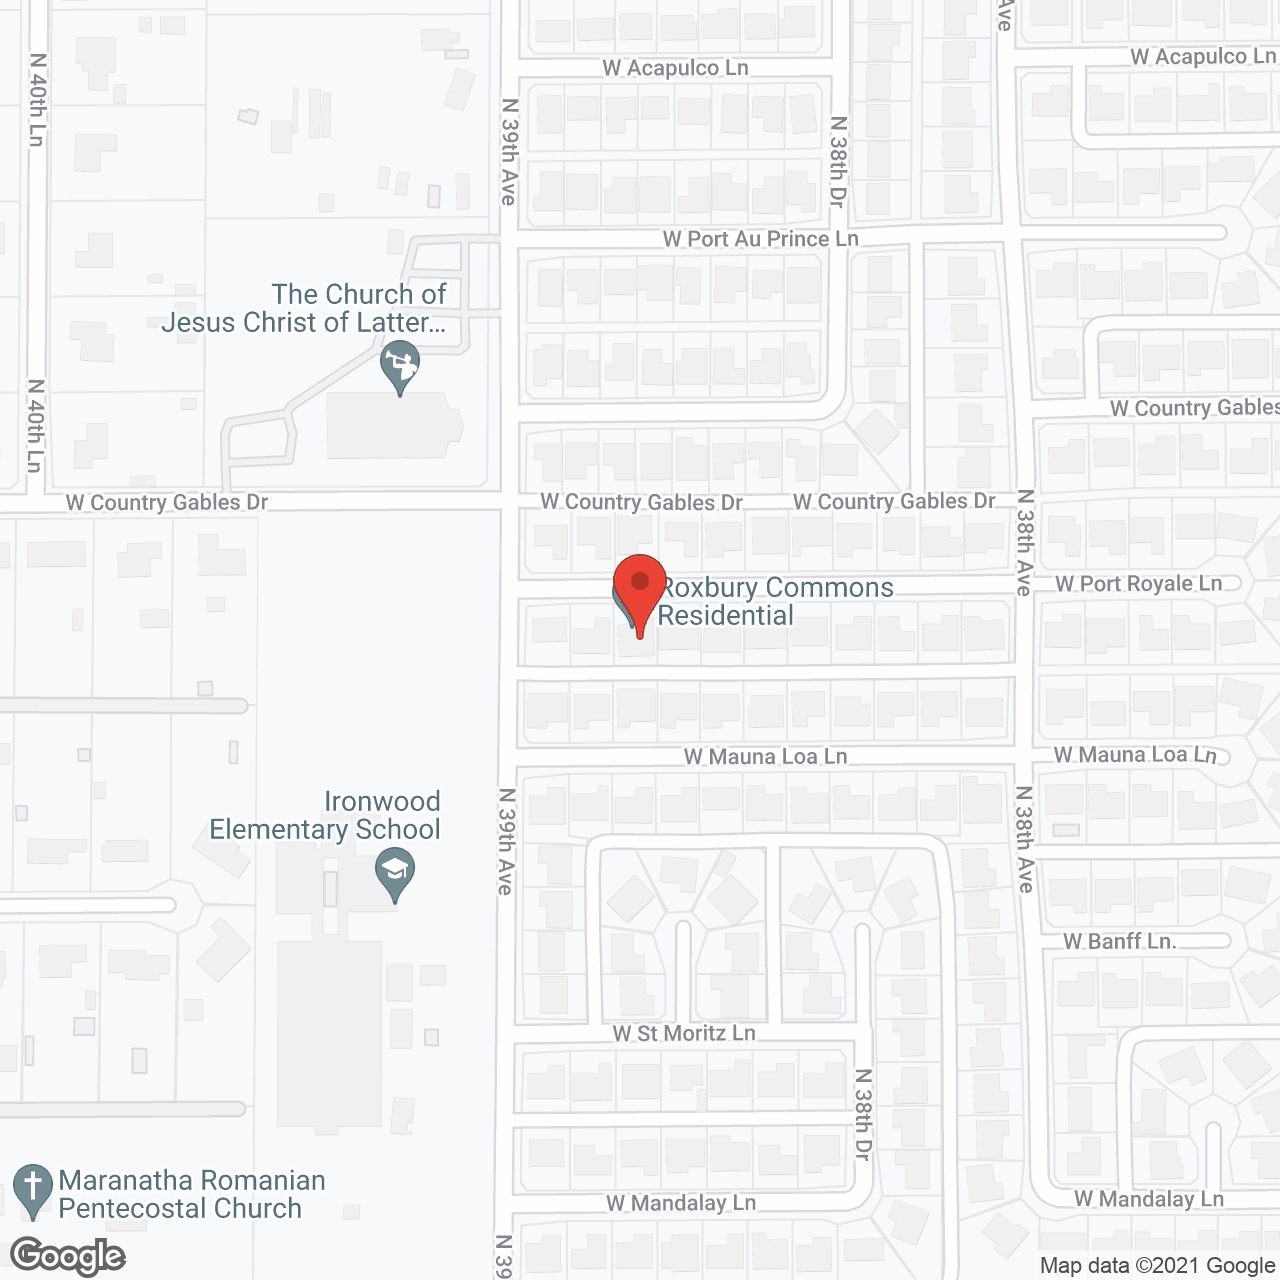 The Sanctuary of Phoenix in google map